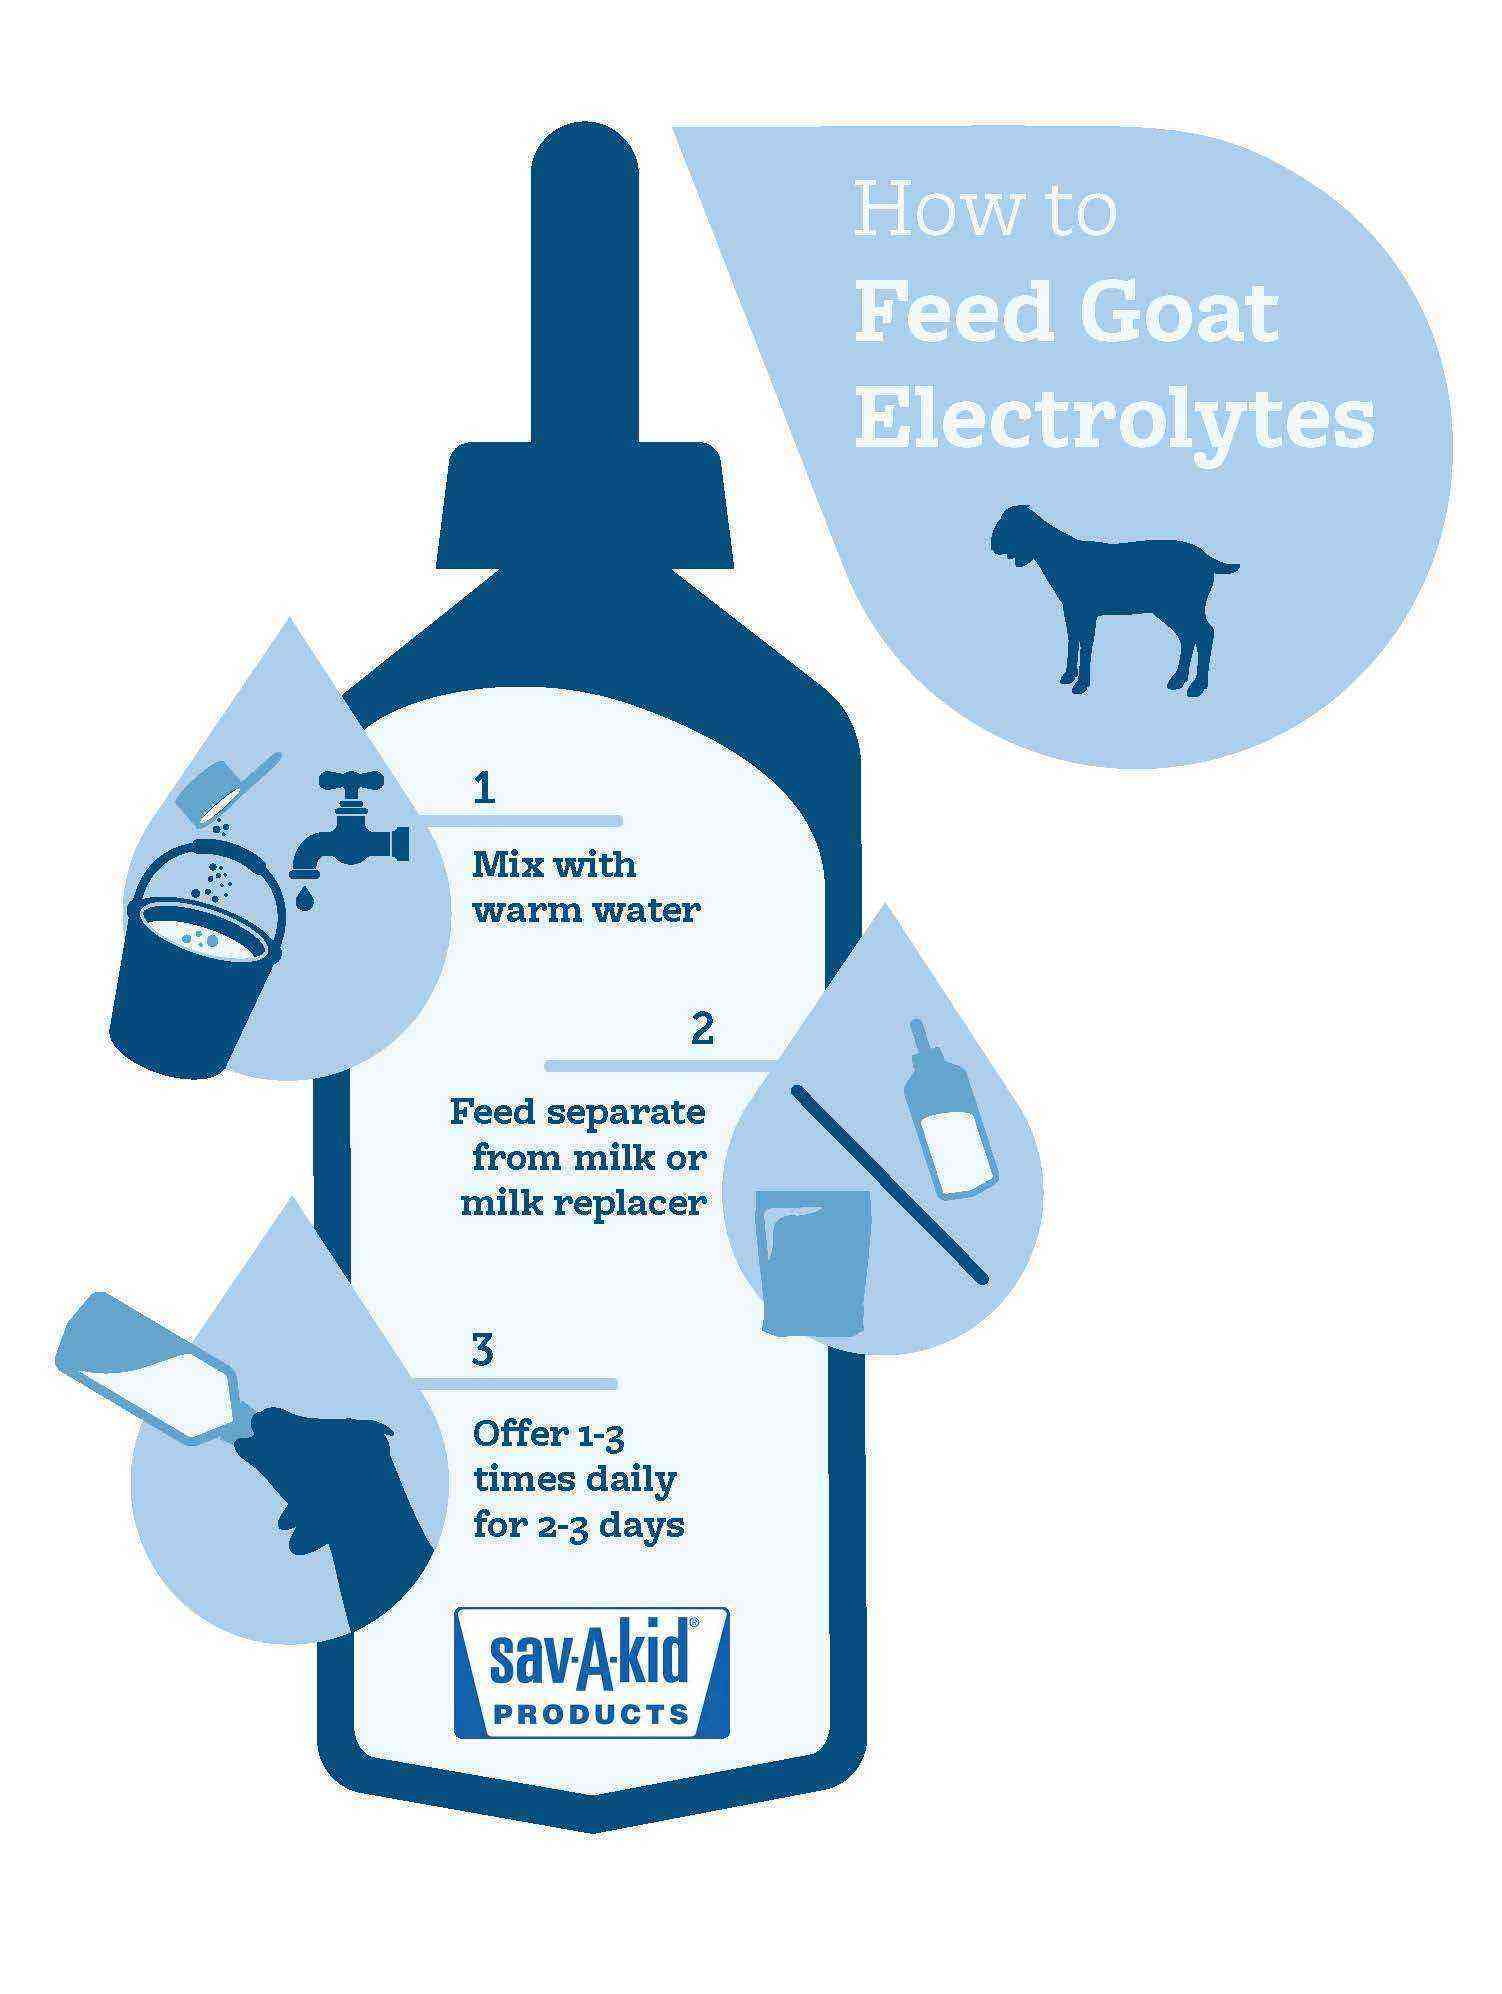 Diarrhea in goats: how to treat